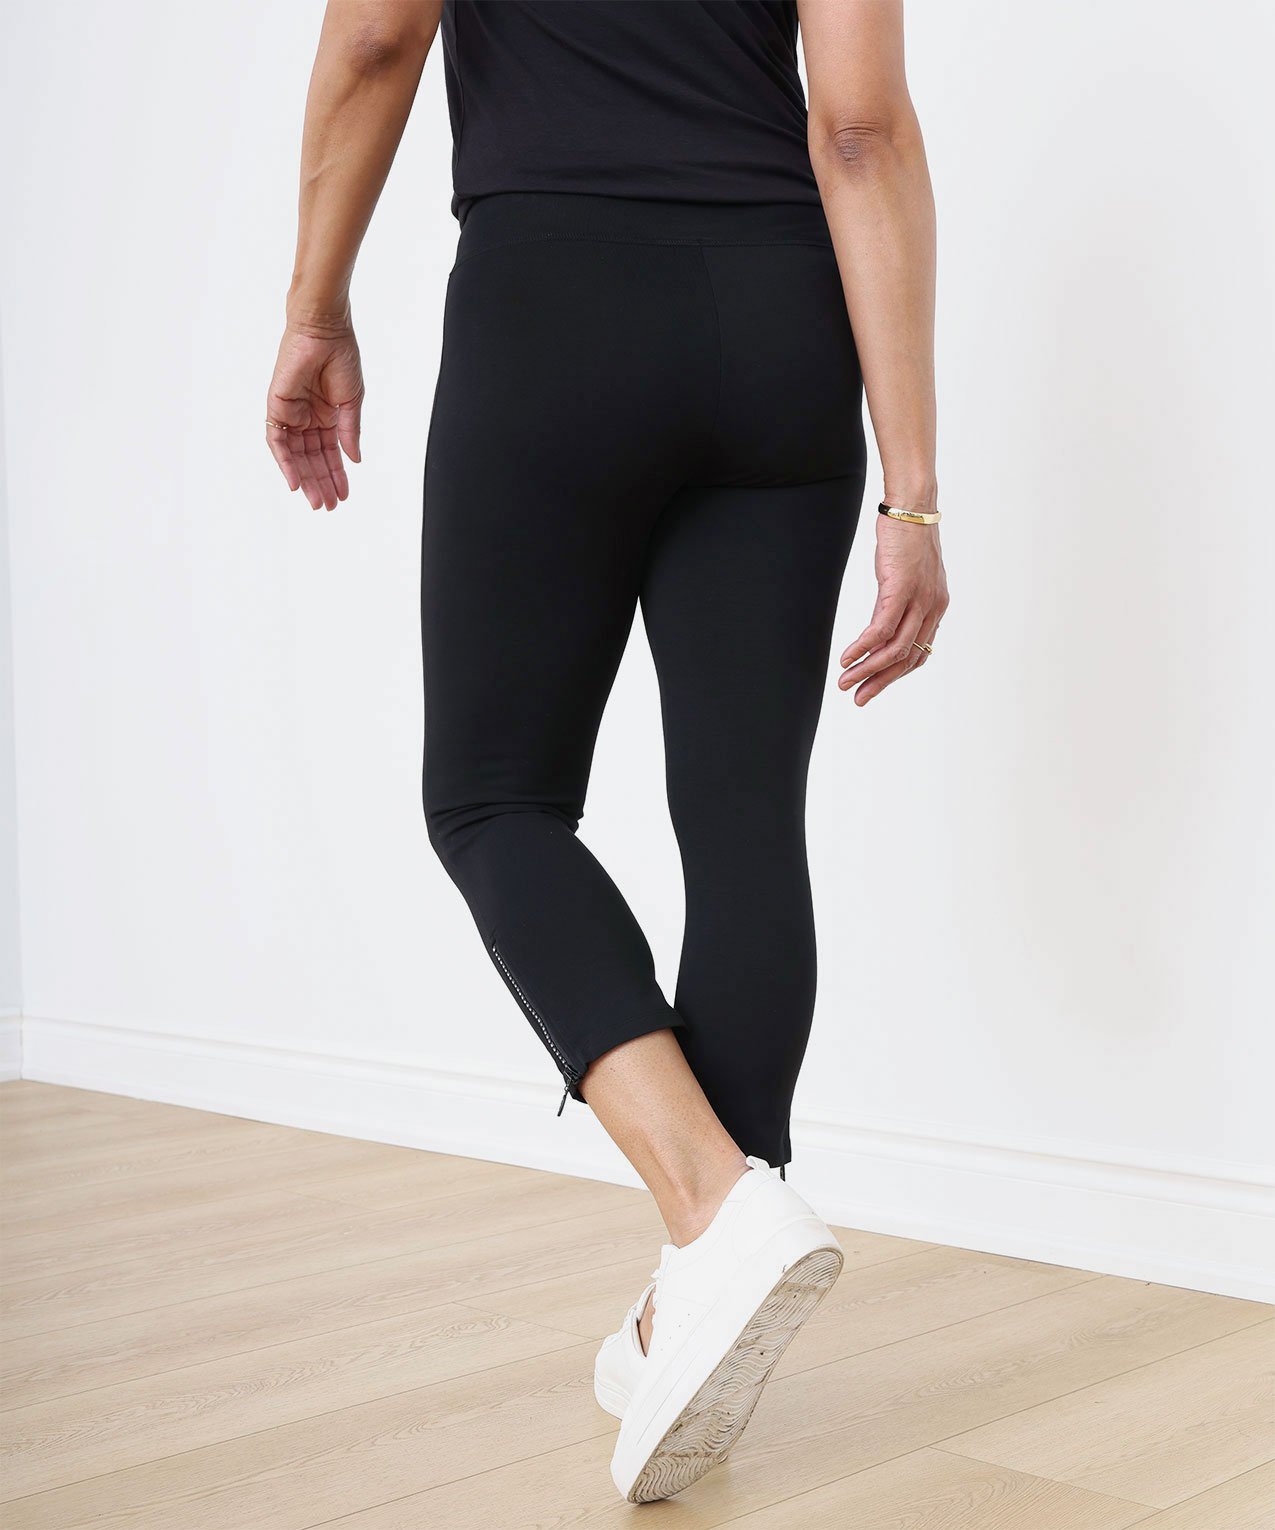 Lucy Brand Hidden Zipper Black Athletic Capri Pants •Size Small - $9 - From  Jennifer